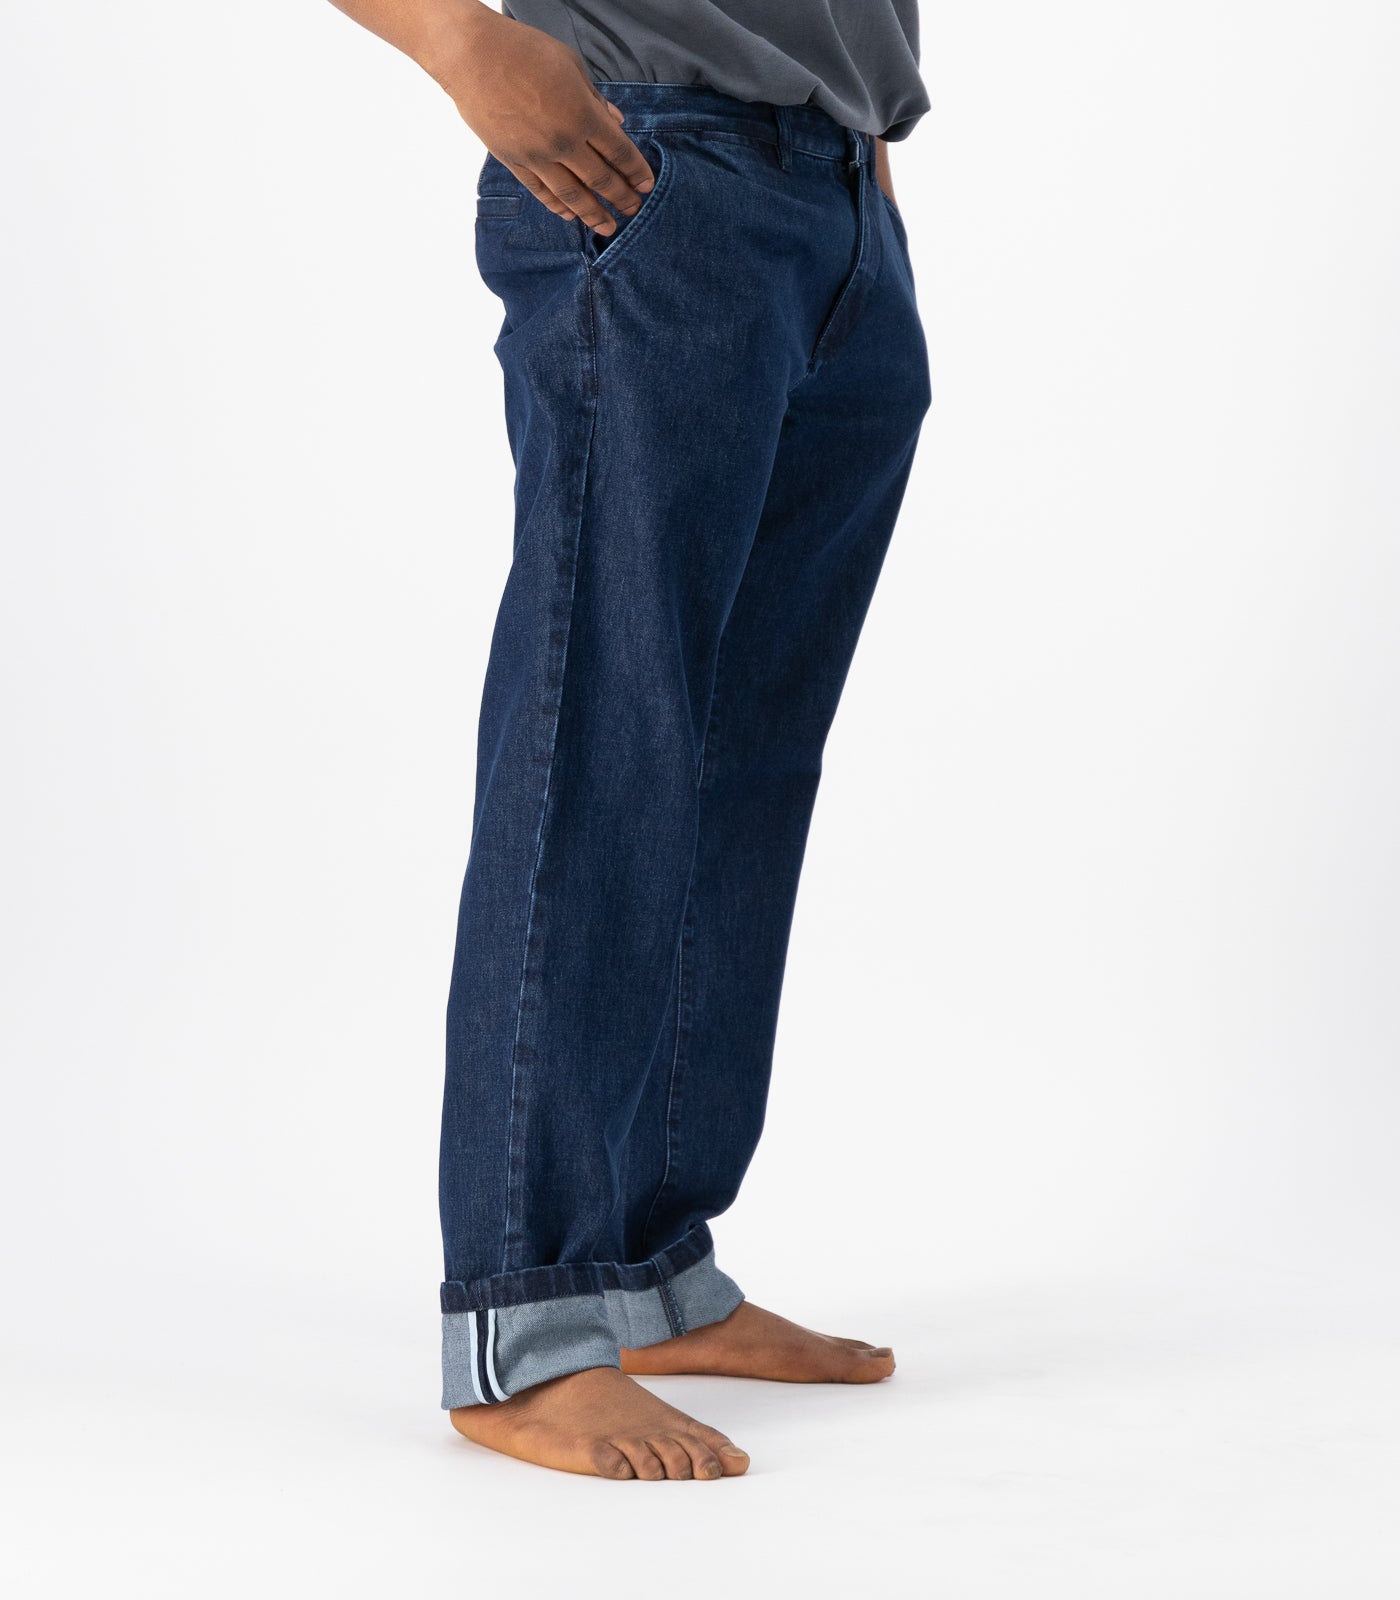 Bhumi Organic Cotton - Men's Jeans- DenimBhumi Organic Cotton - Men's Jeans- Denim